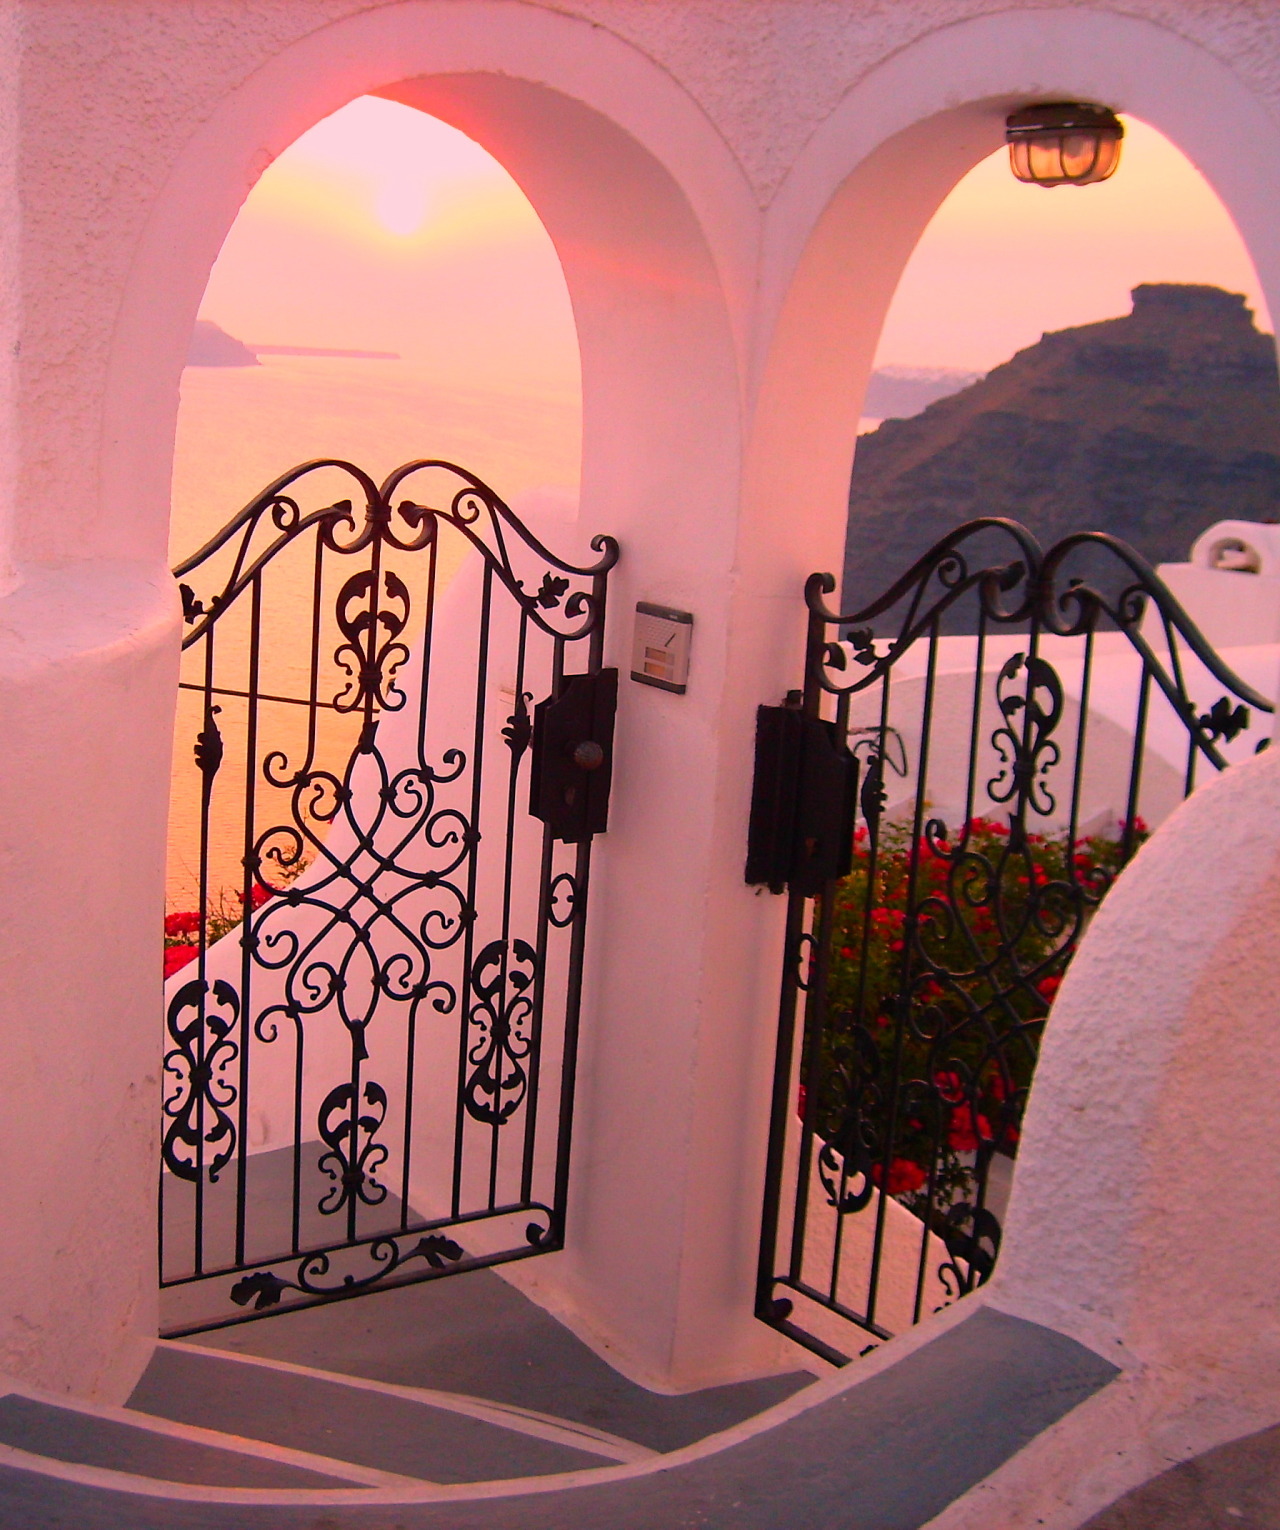 Always a dream destination, Santorini, Greece